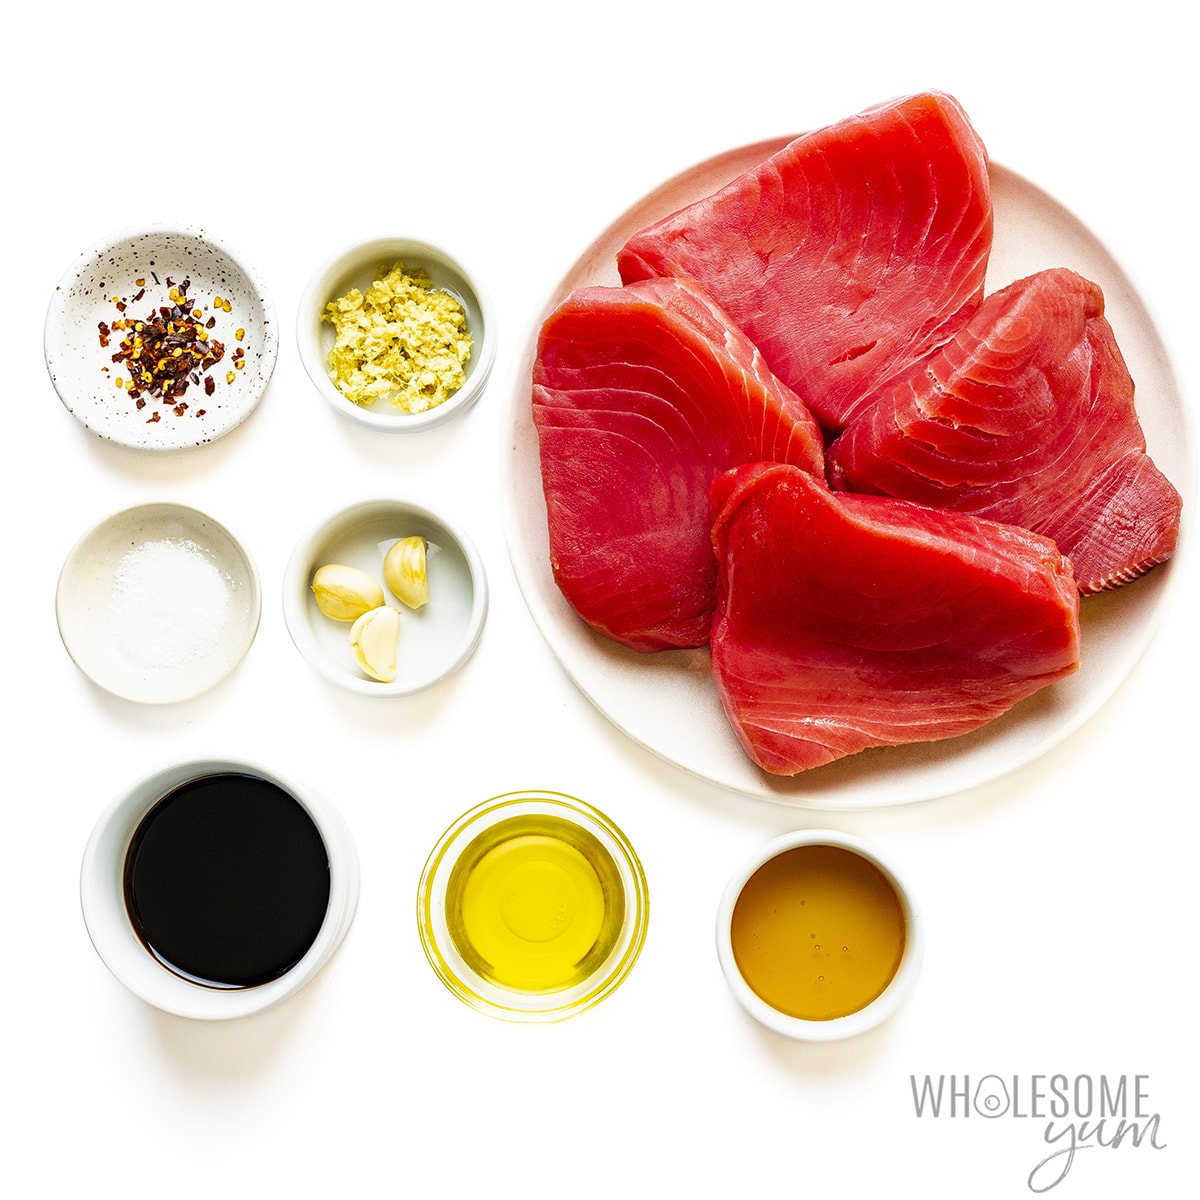 Tuna steak recipe ingredients measured on plates.